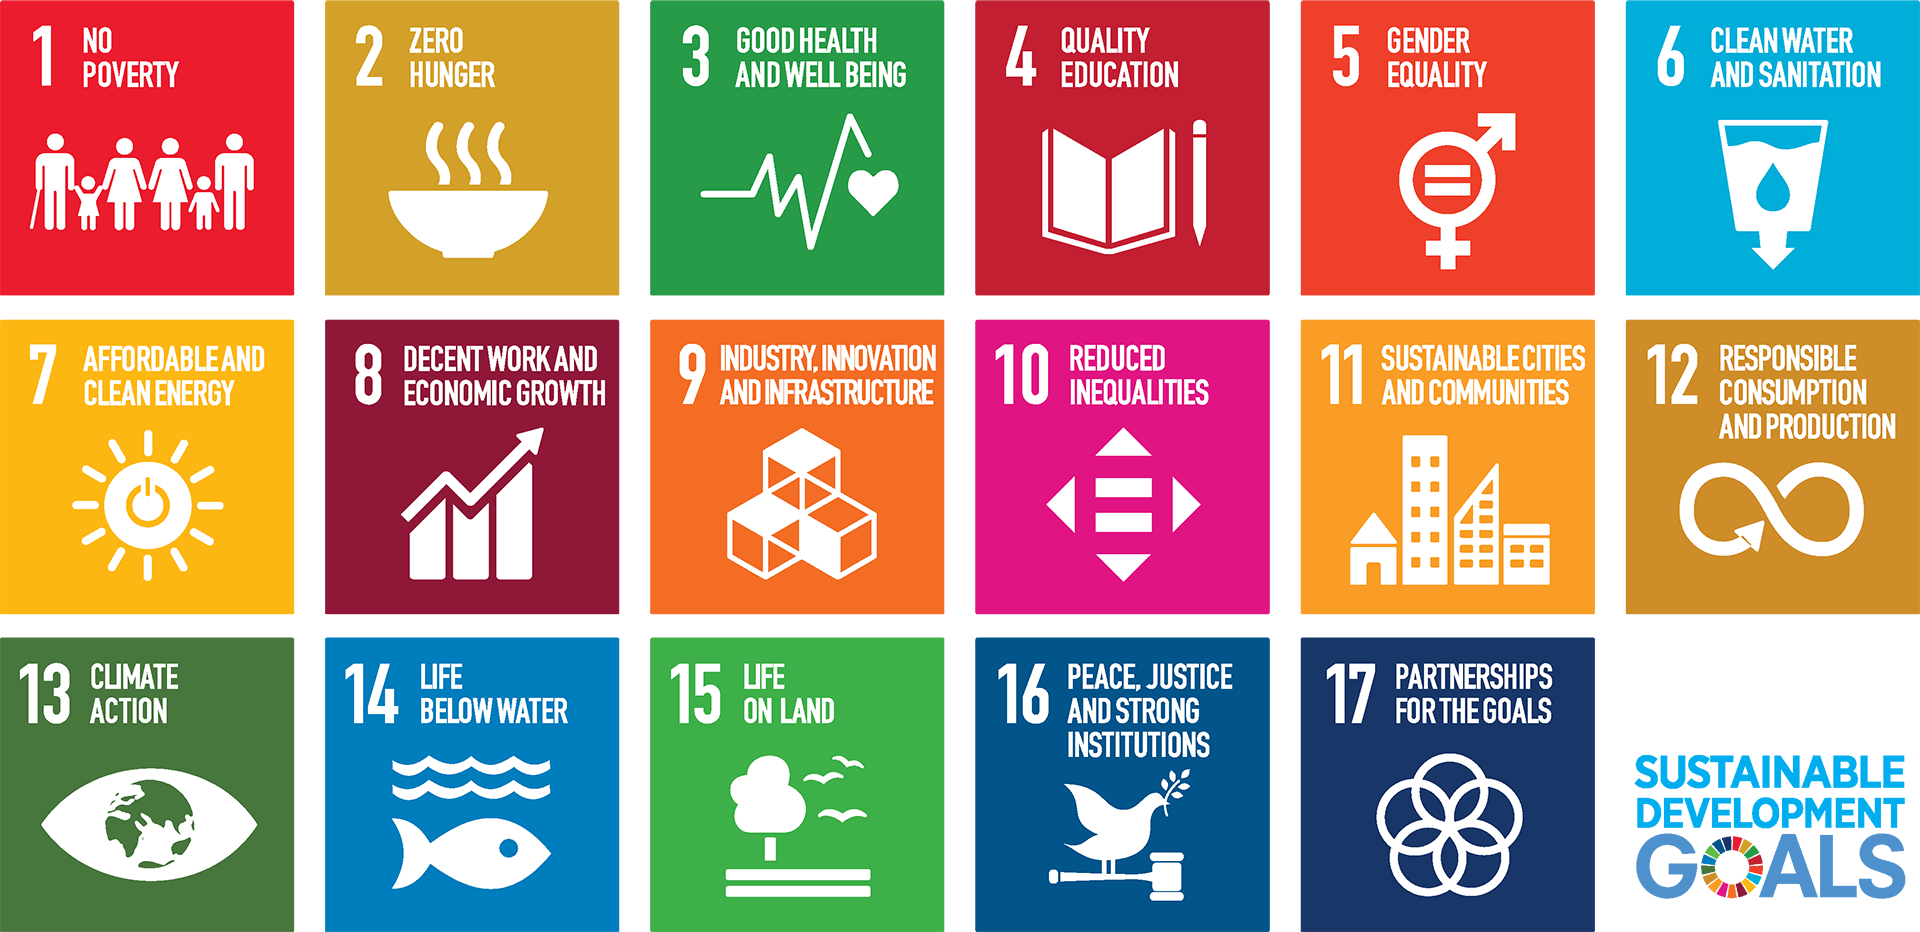 The UN's sustainable development goals